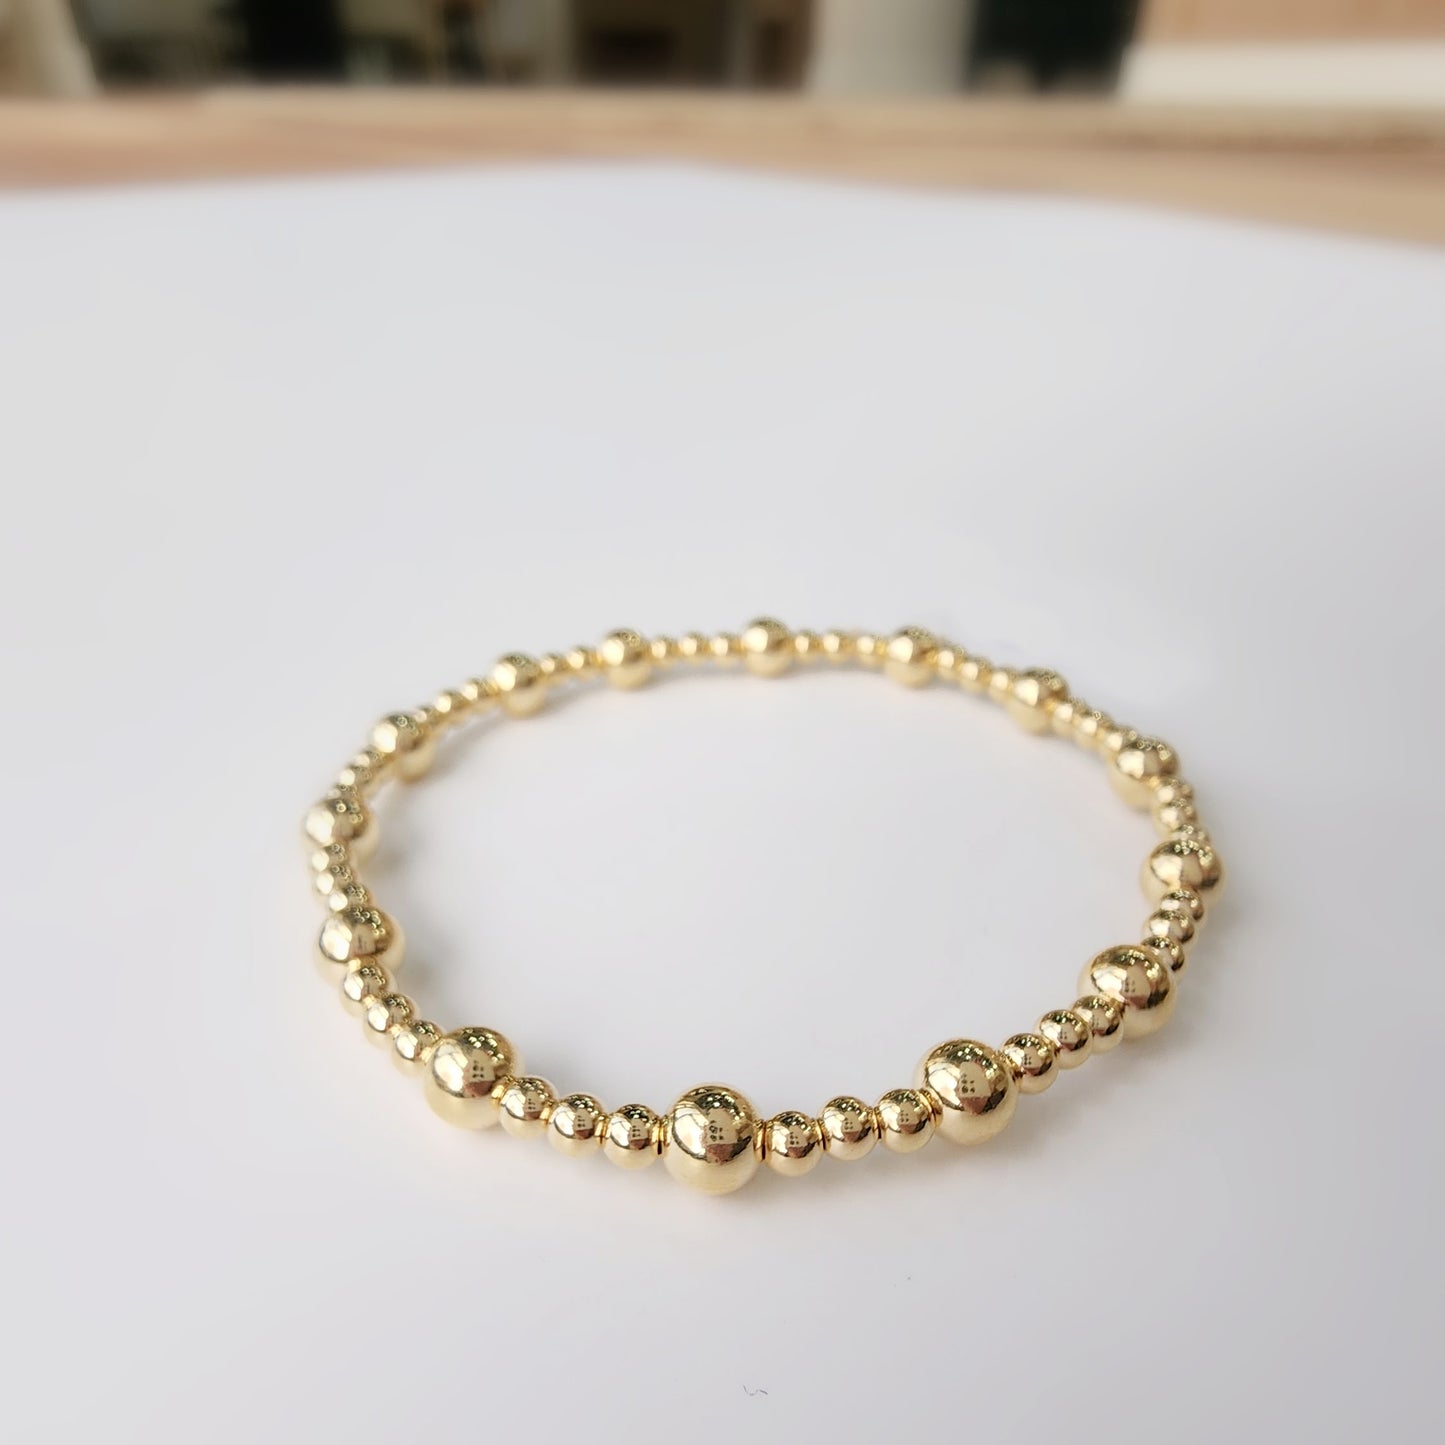 Stretch Bead Bracelets - Going Golden